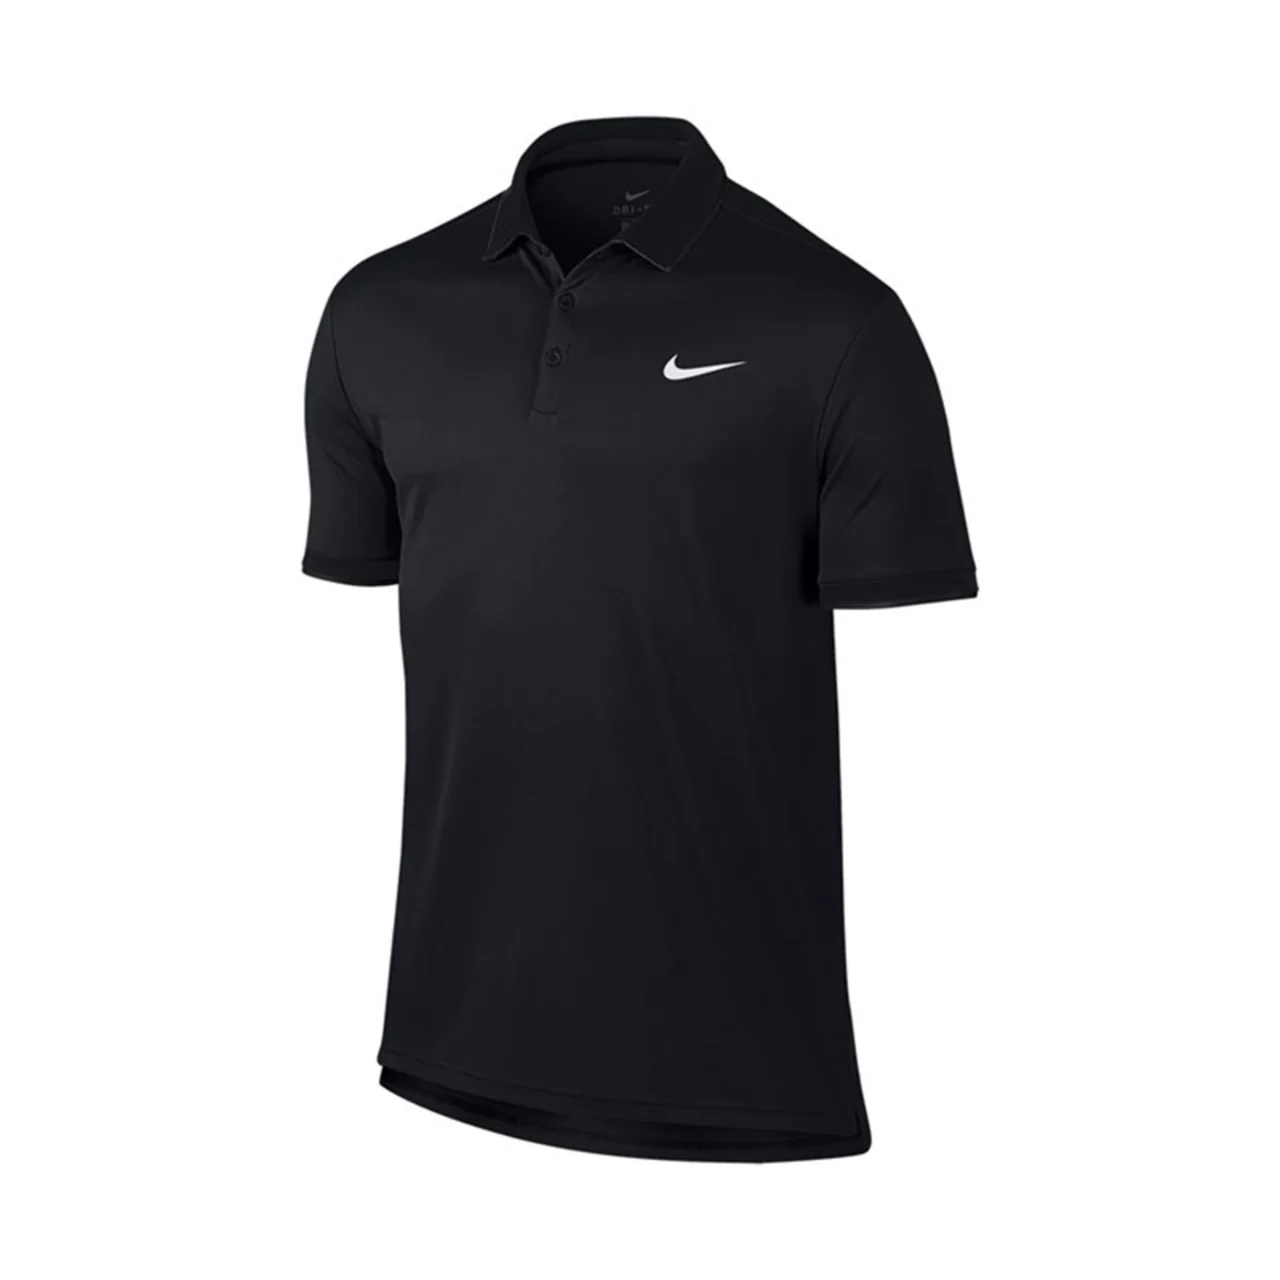 Nike Dry Polo Team All Black